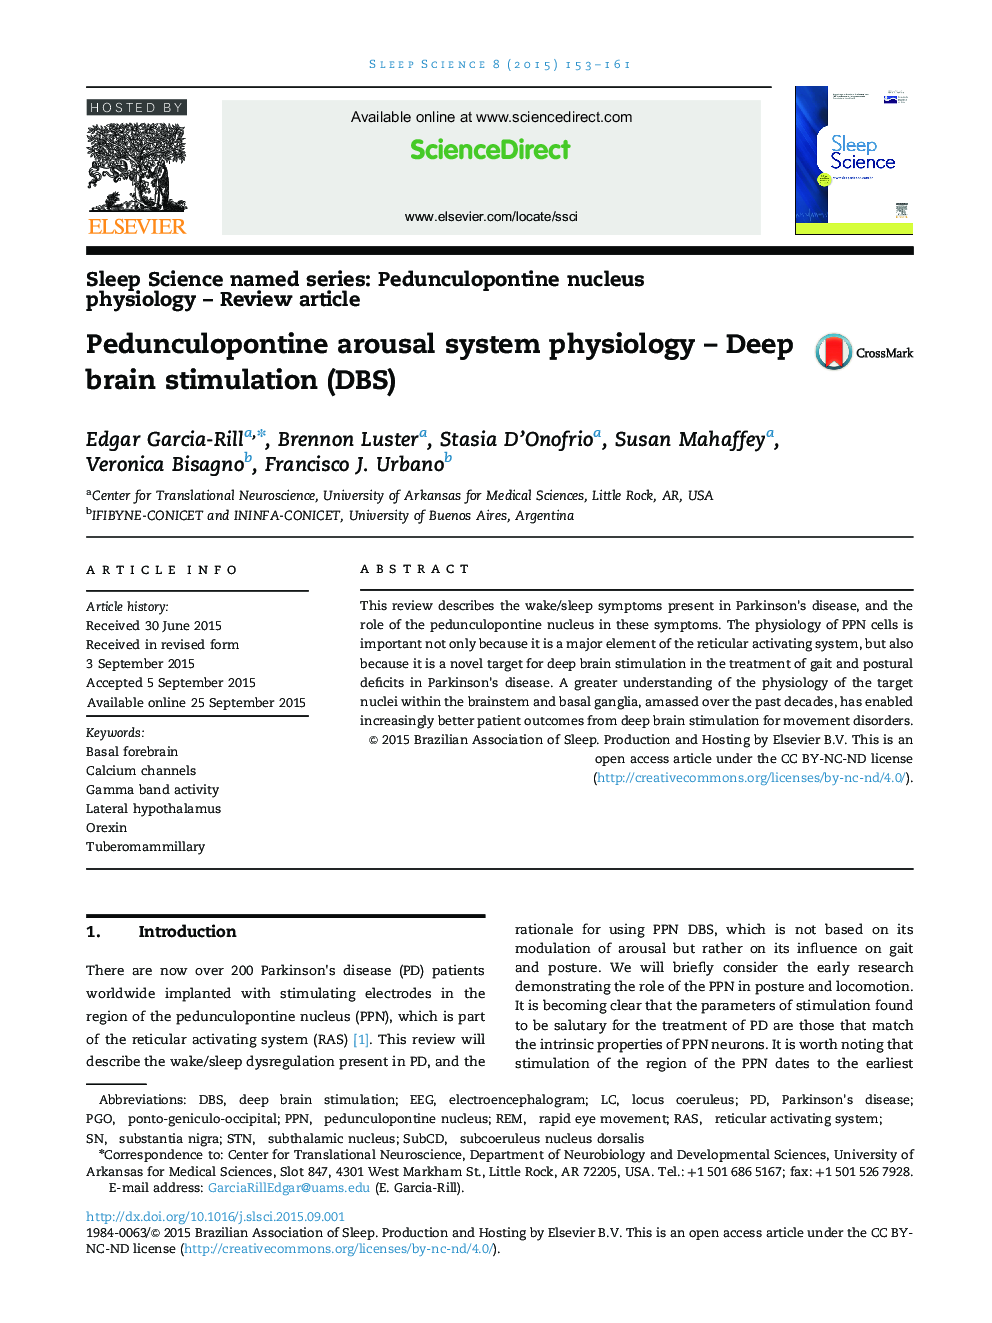 Pedunculopontine arousal system physiology – Deep brain stimulation (DBS)